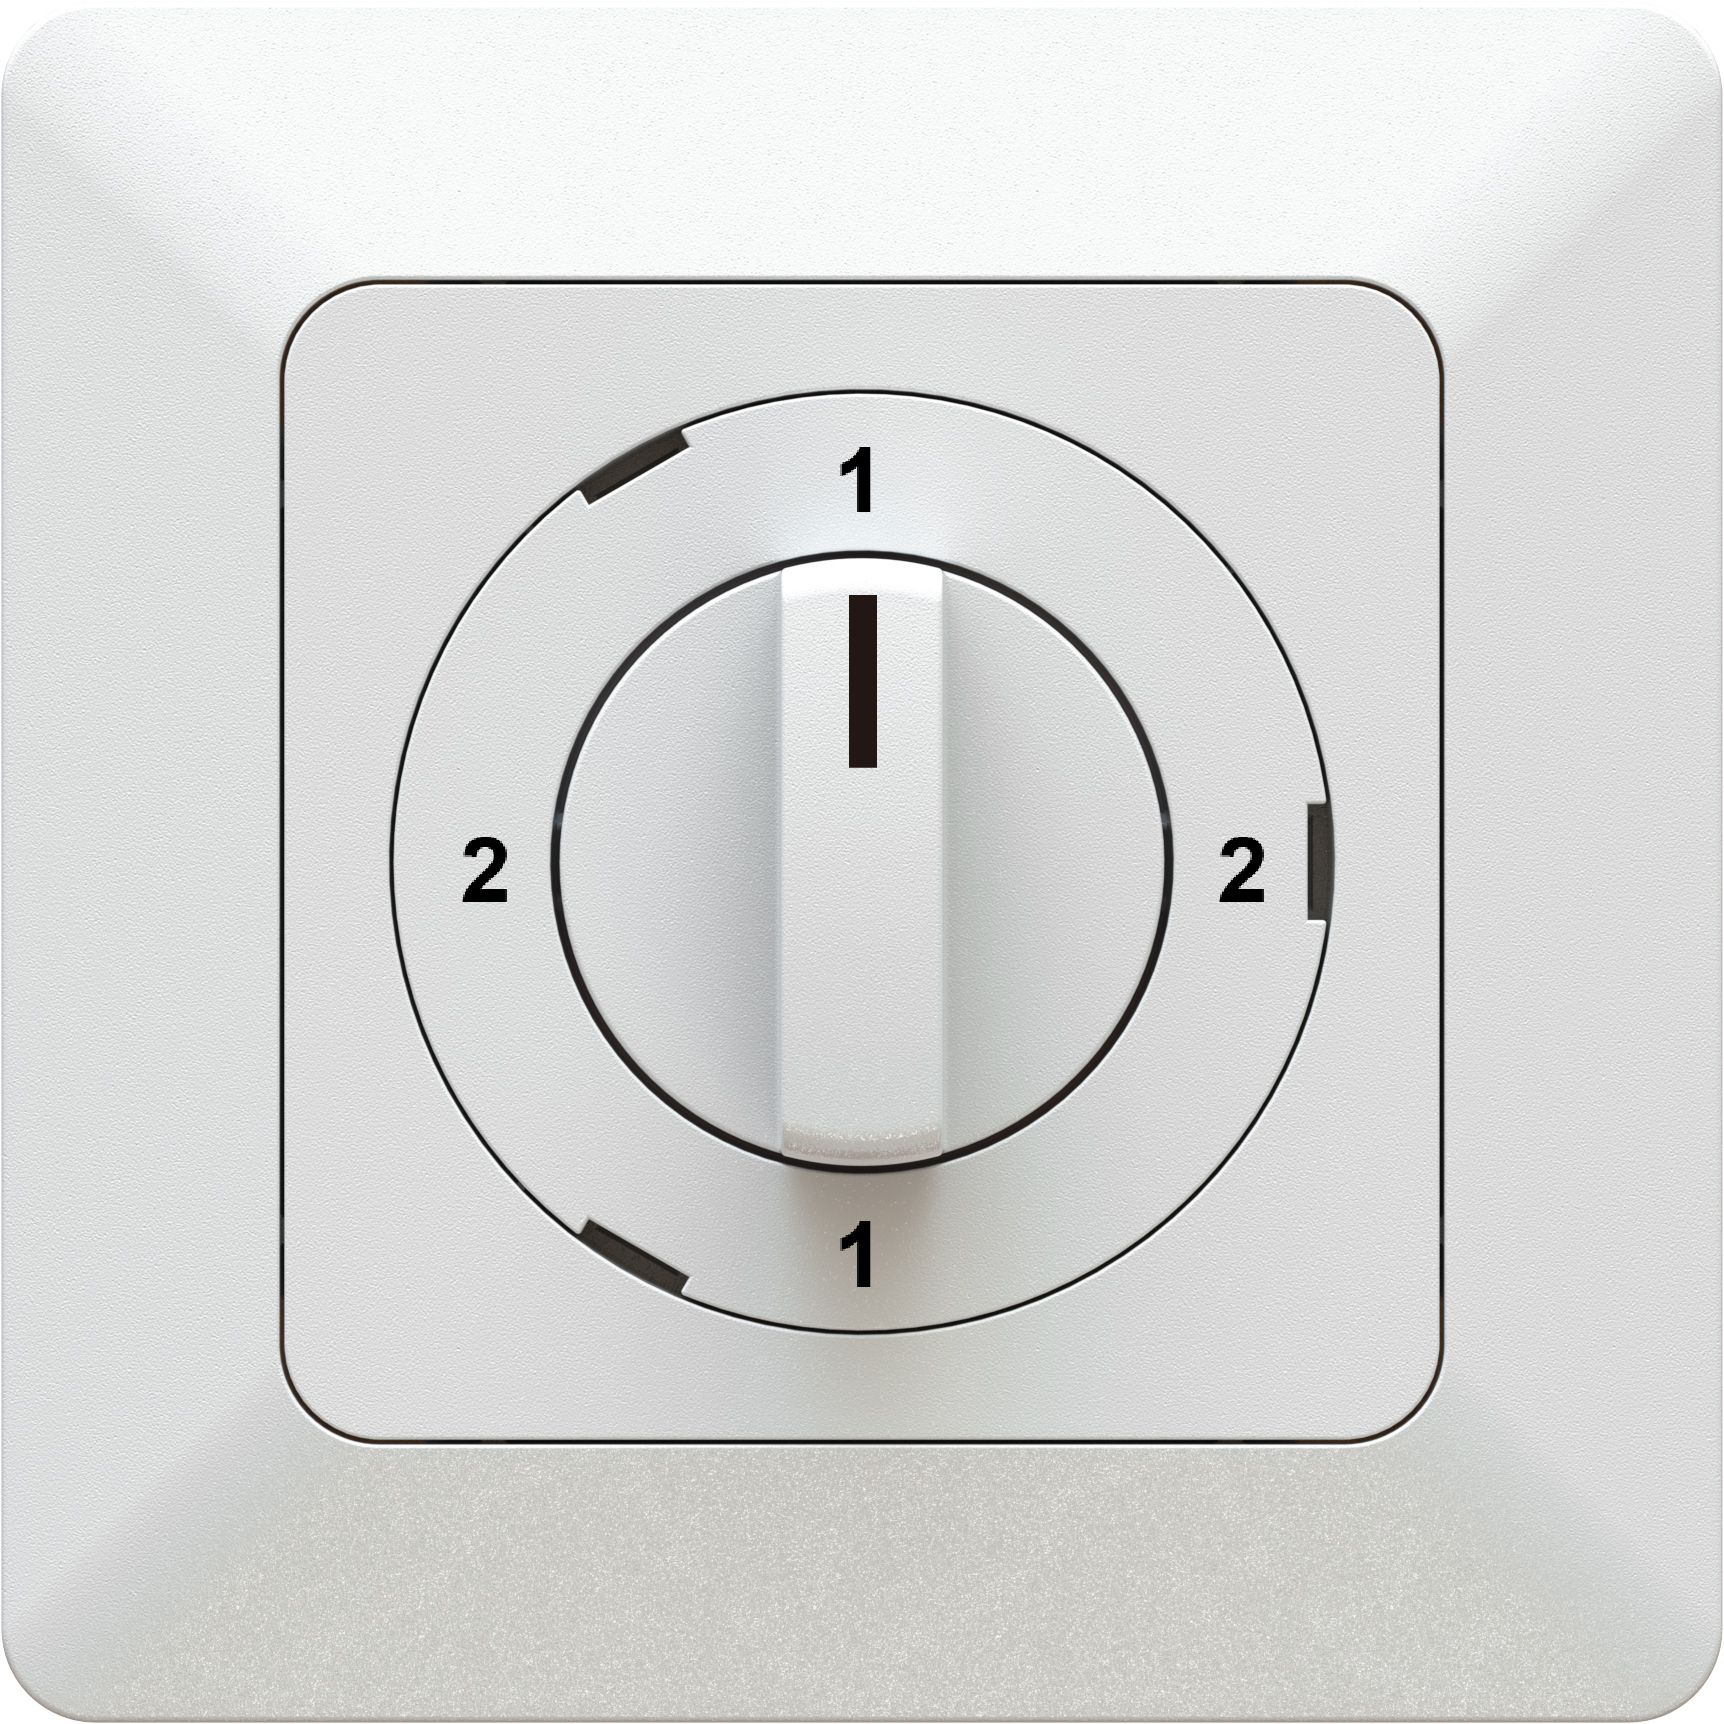 interrupteur rotatif schéma 3/1L 1-2-1-2 ENC priamos blanc